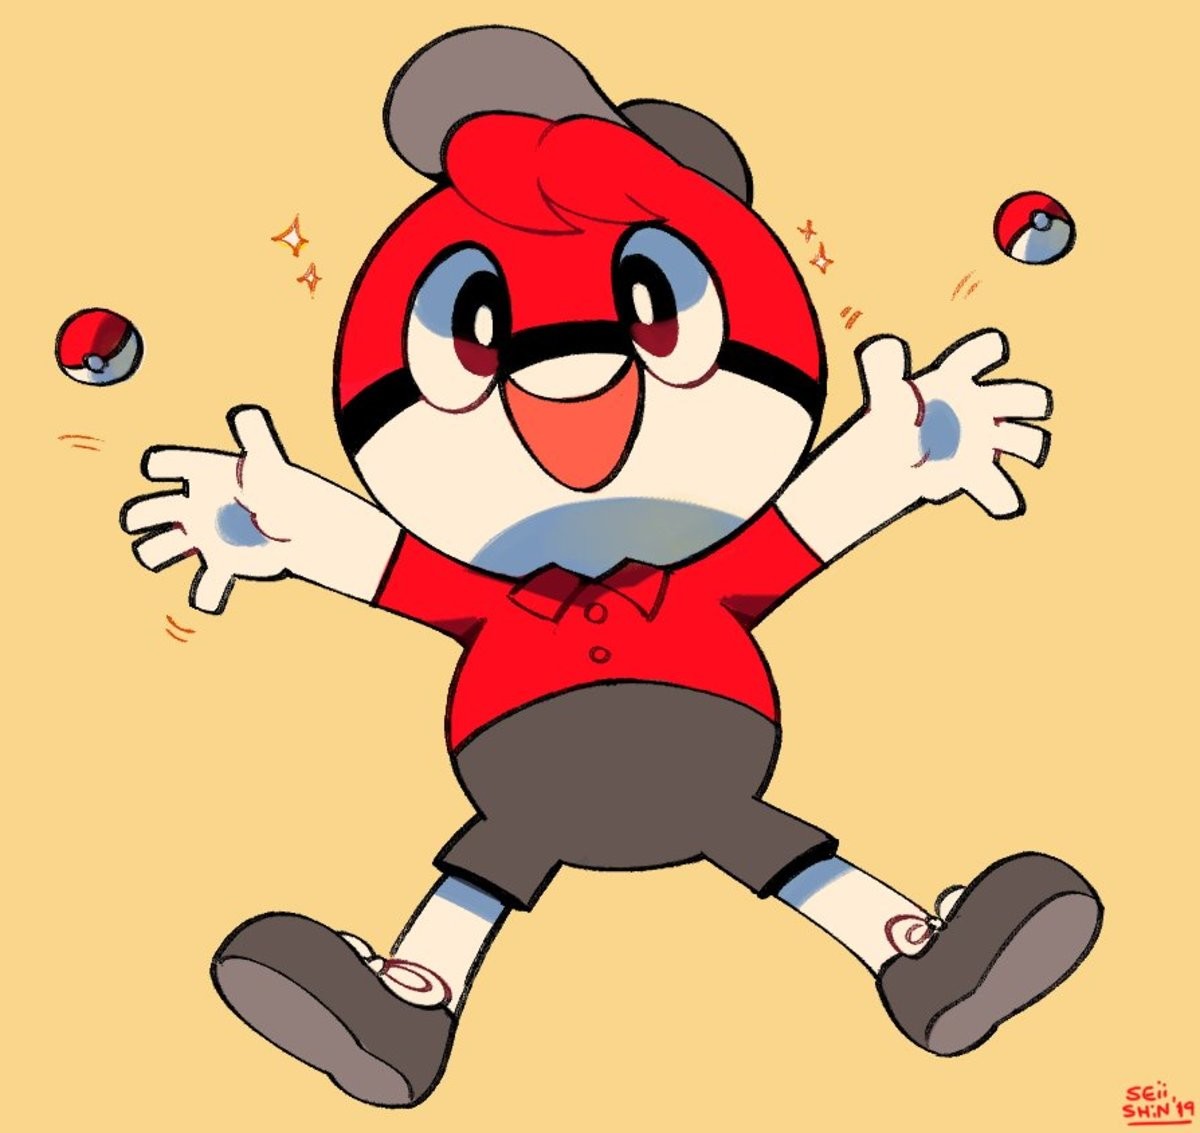 Ball guy. Pokeball guy. Xilam Boll. Red hat Mascot.